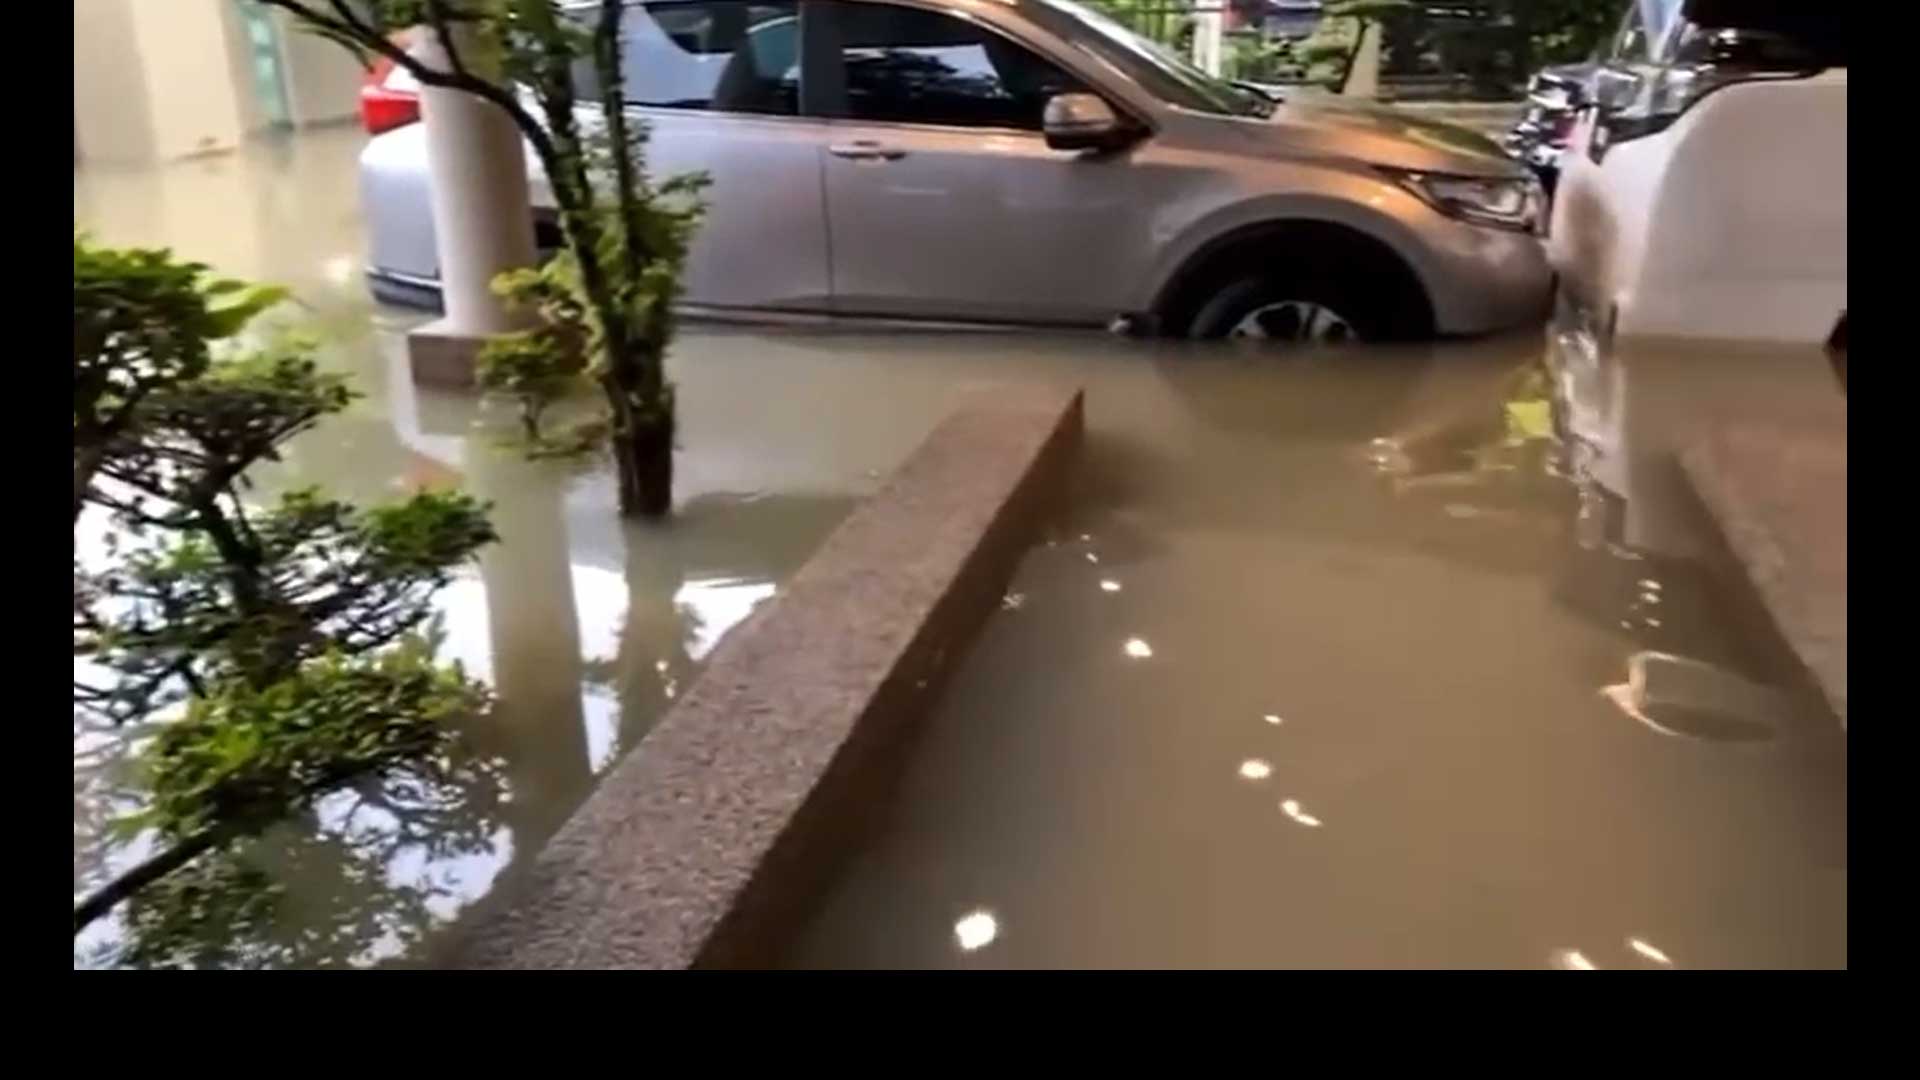 Flood 